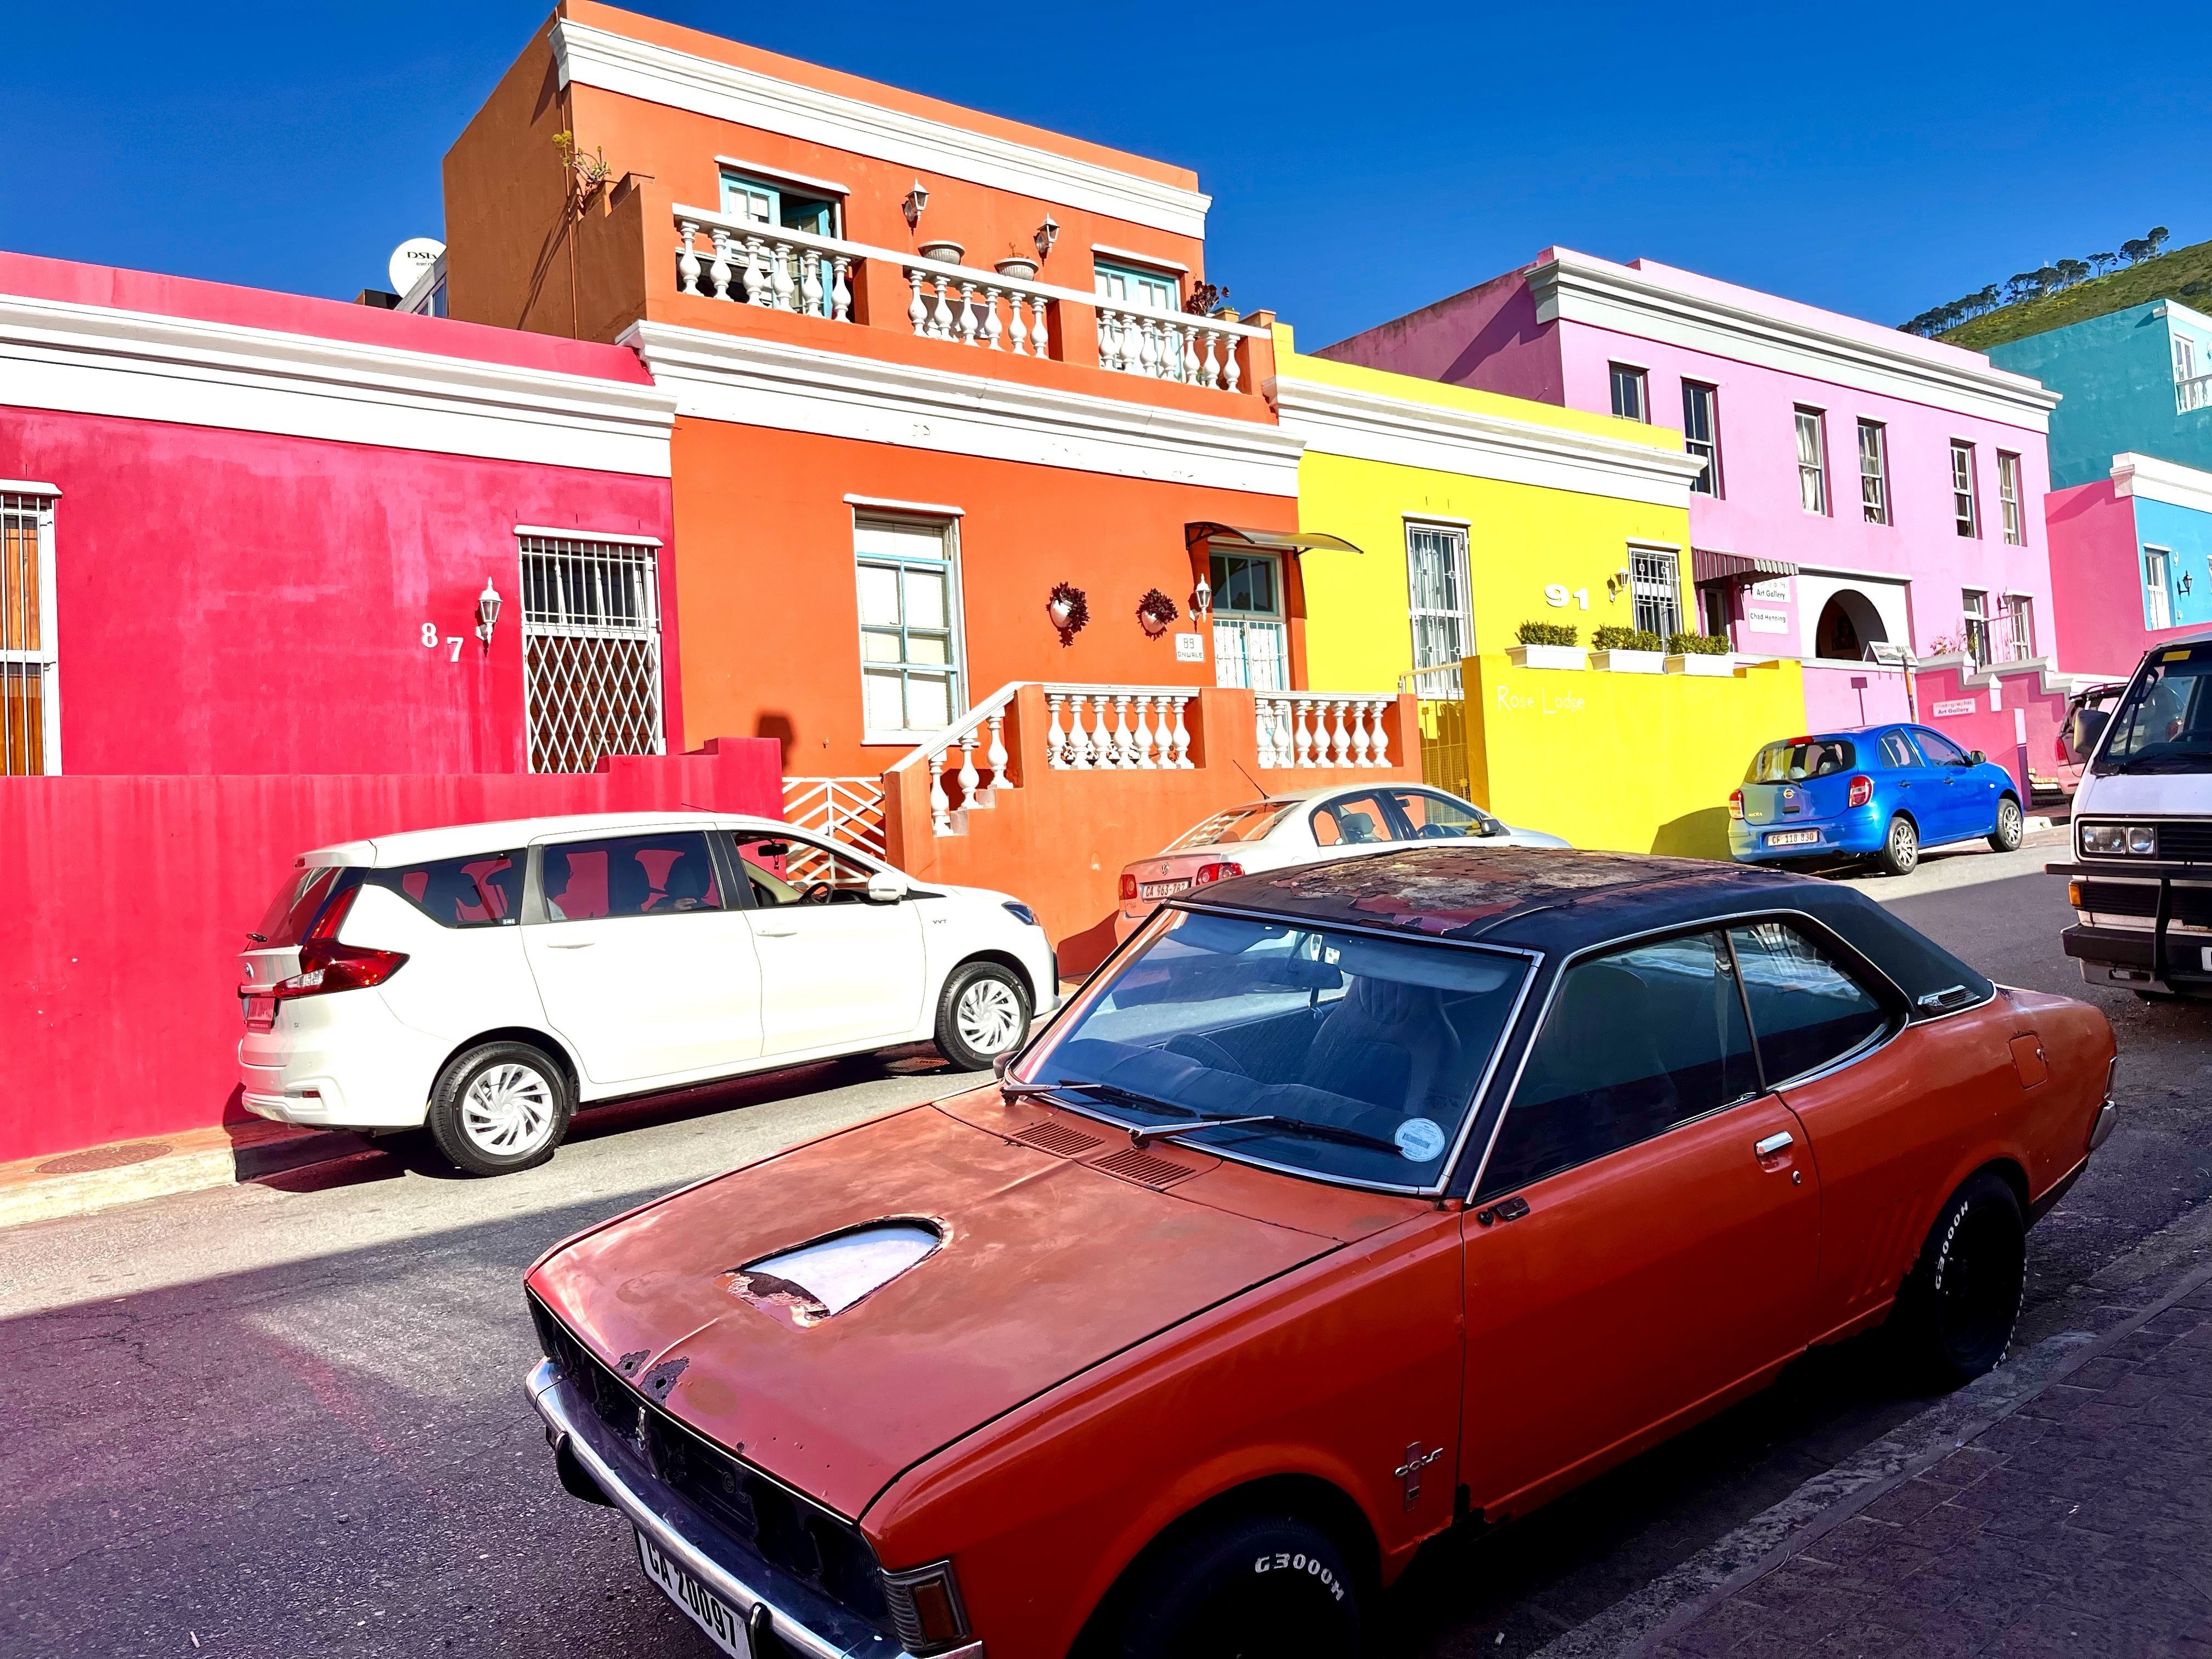 Cape Town – an architectural wonderland